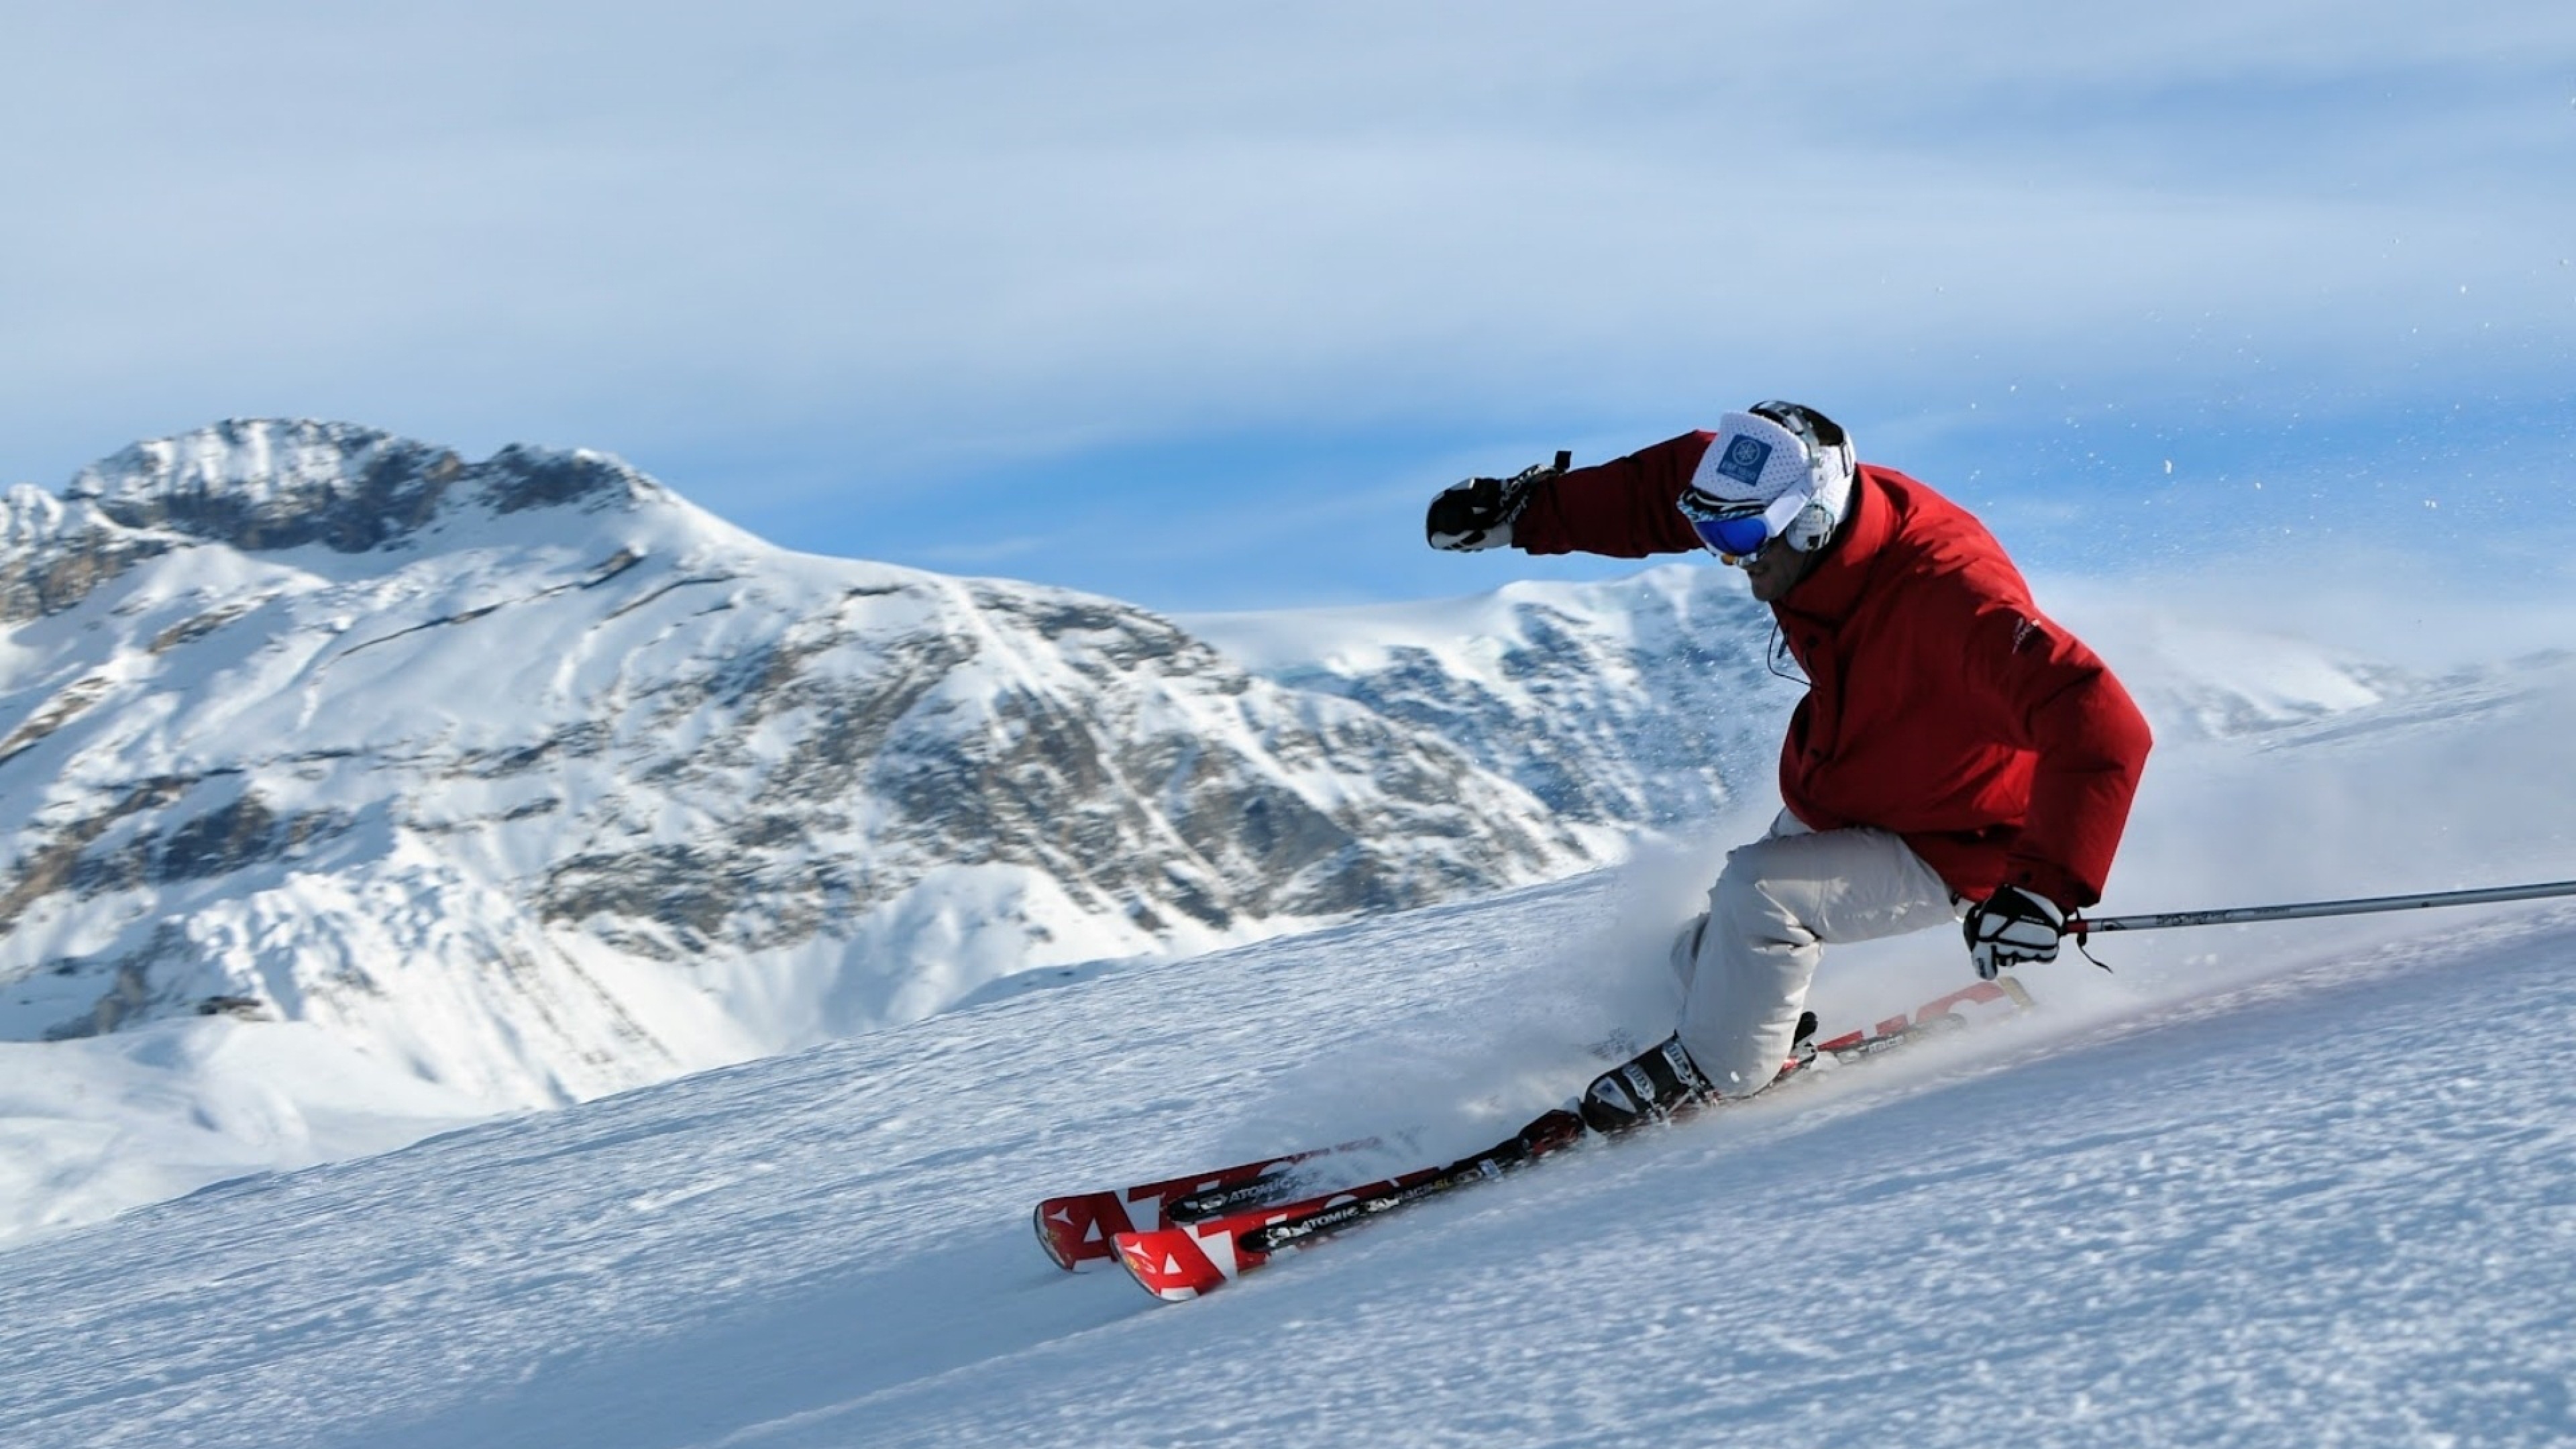 Wallpaper Skiing Ride Slopes Skier Snow 4k